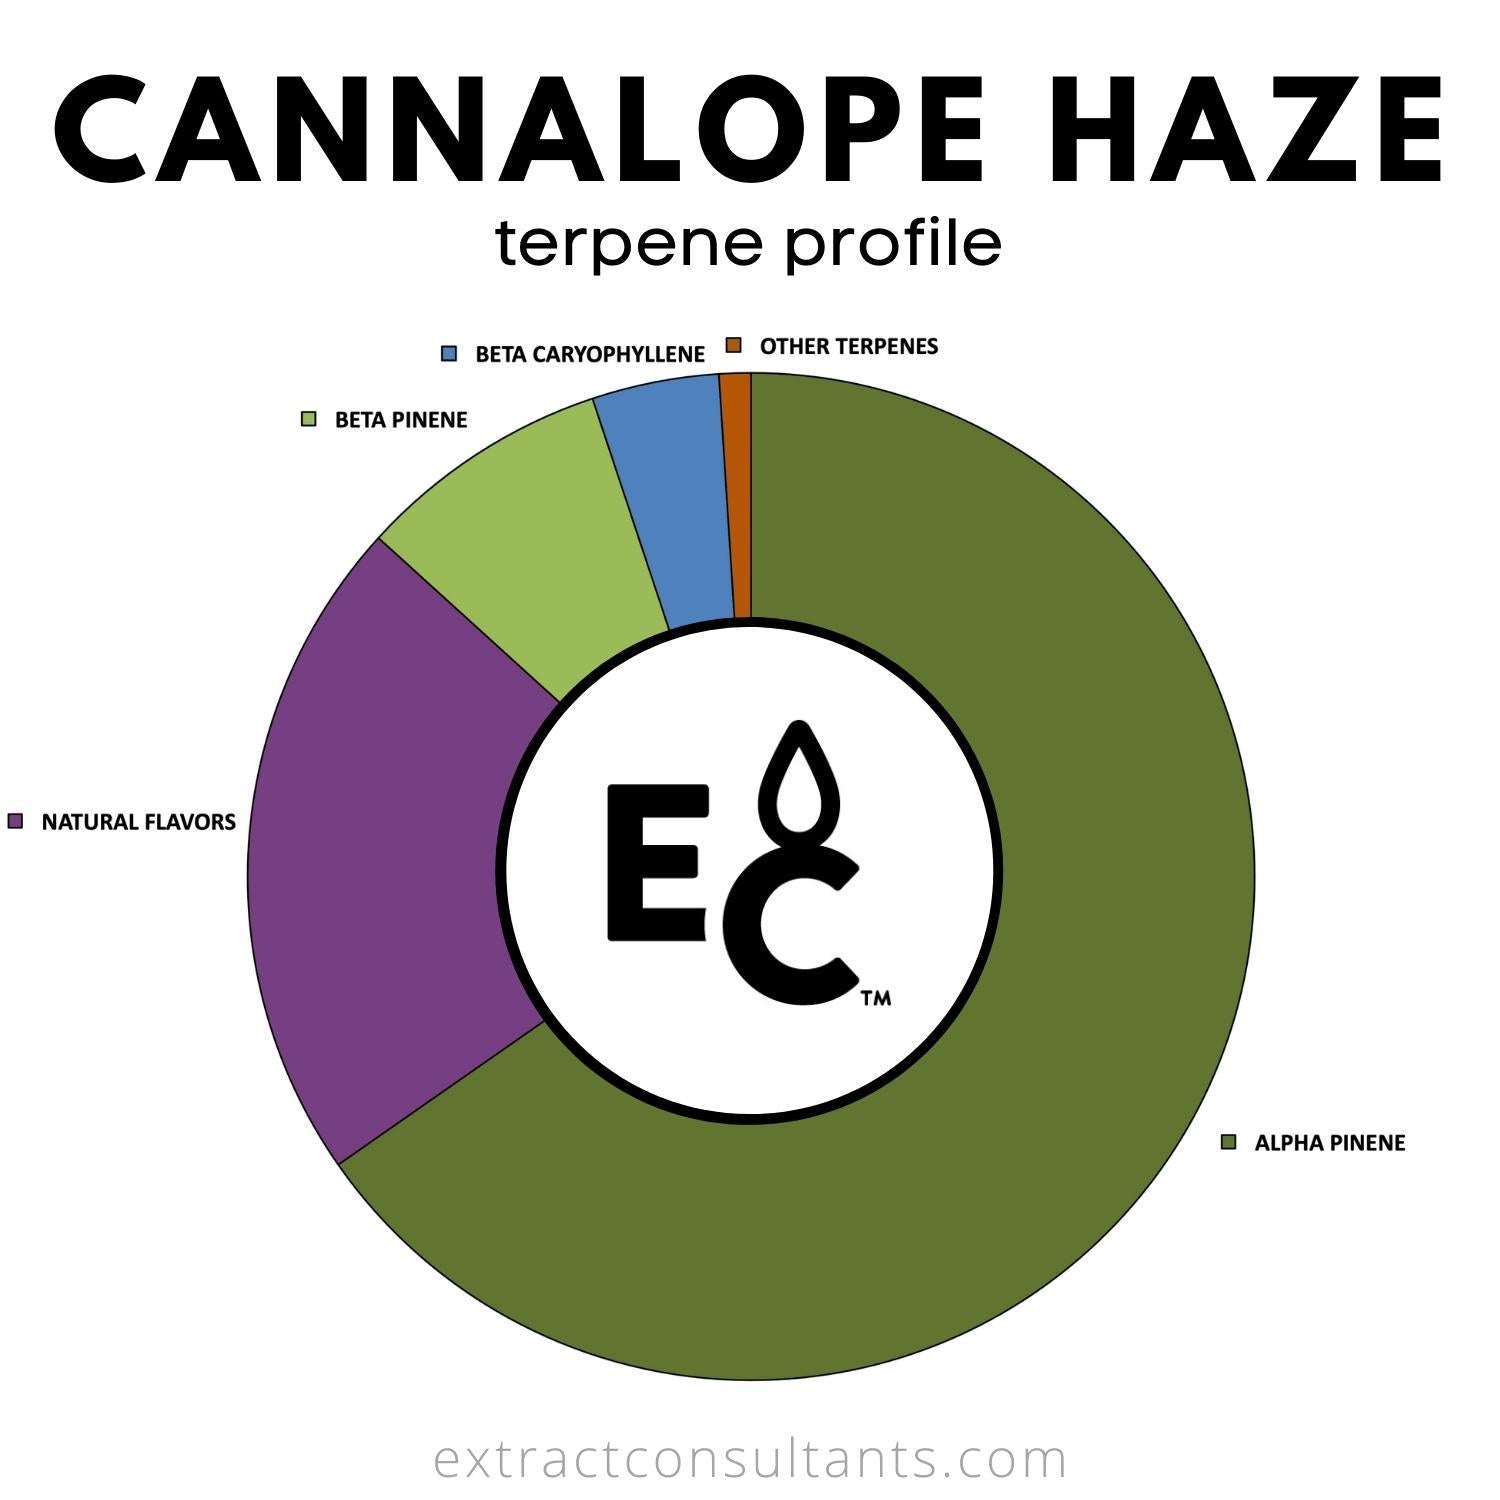 Cannalope Haze terpene profile chart